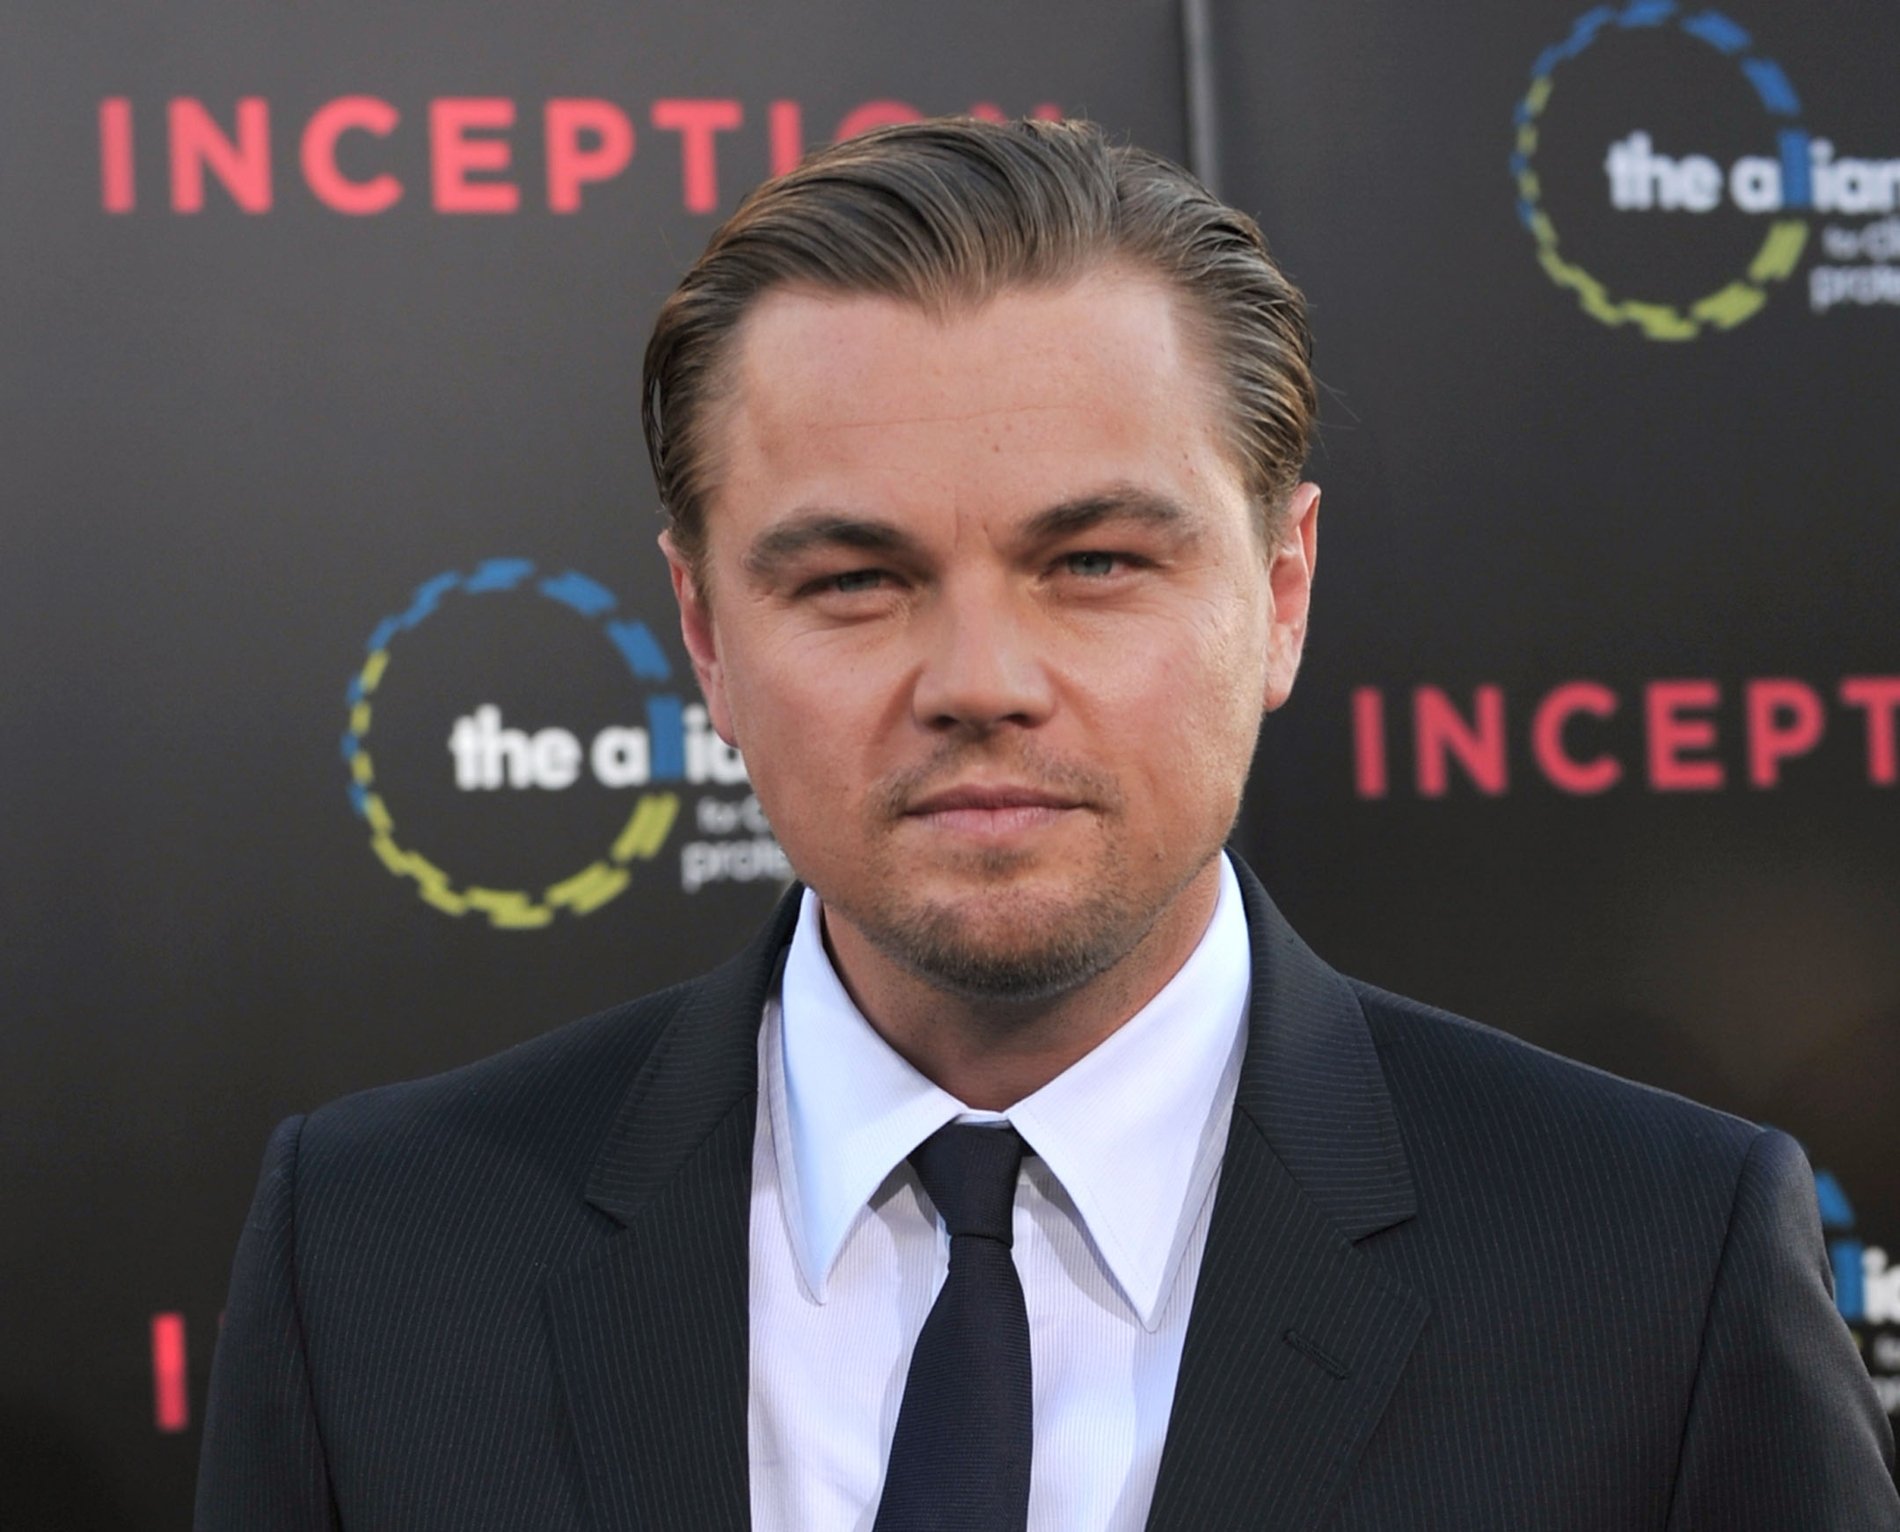 Leonardo DiCaprio Felt Like He Was in a Boy Band in ‘Inception’ Scene